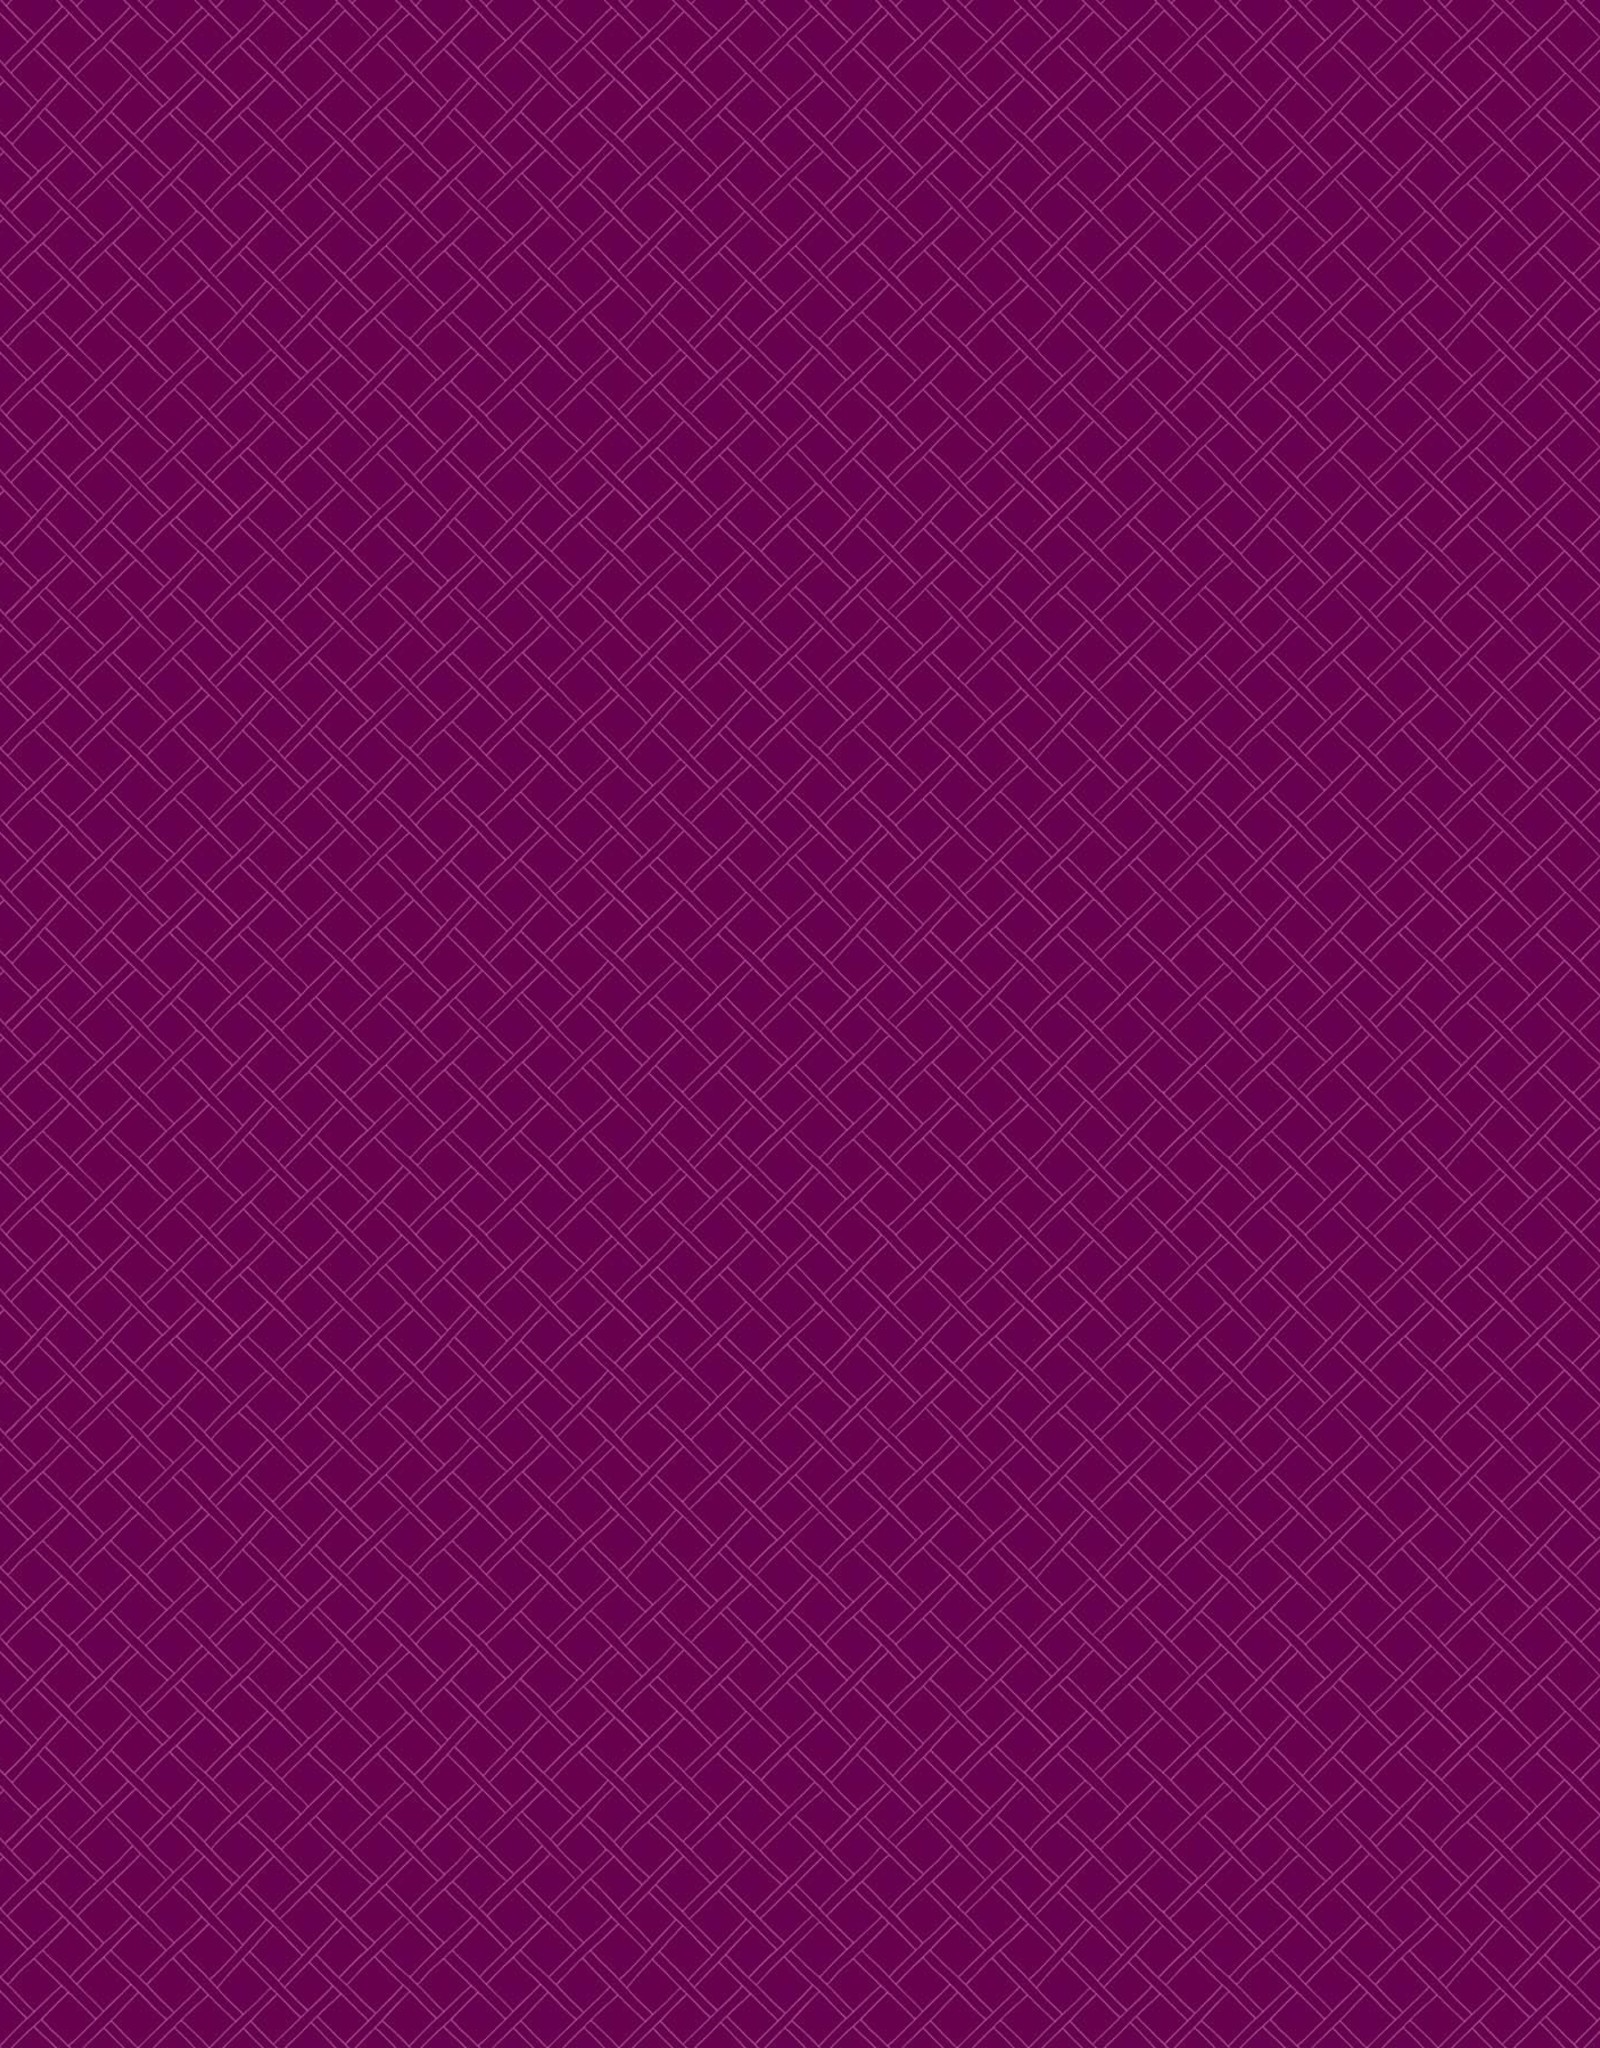 Primavera Purple trellis (1/2m) 90320-83